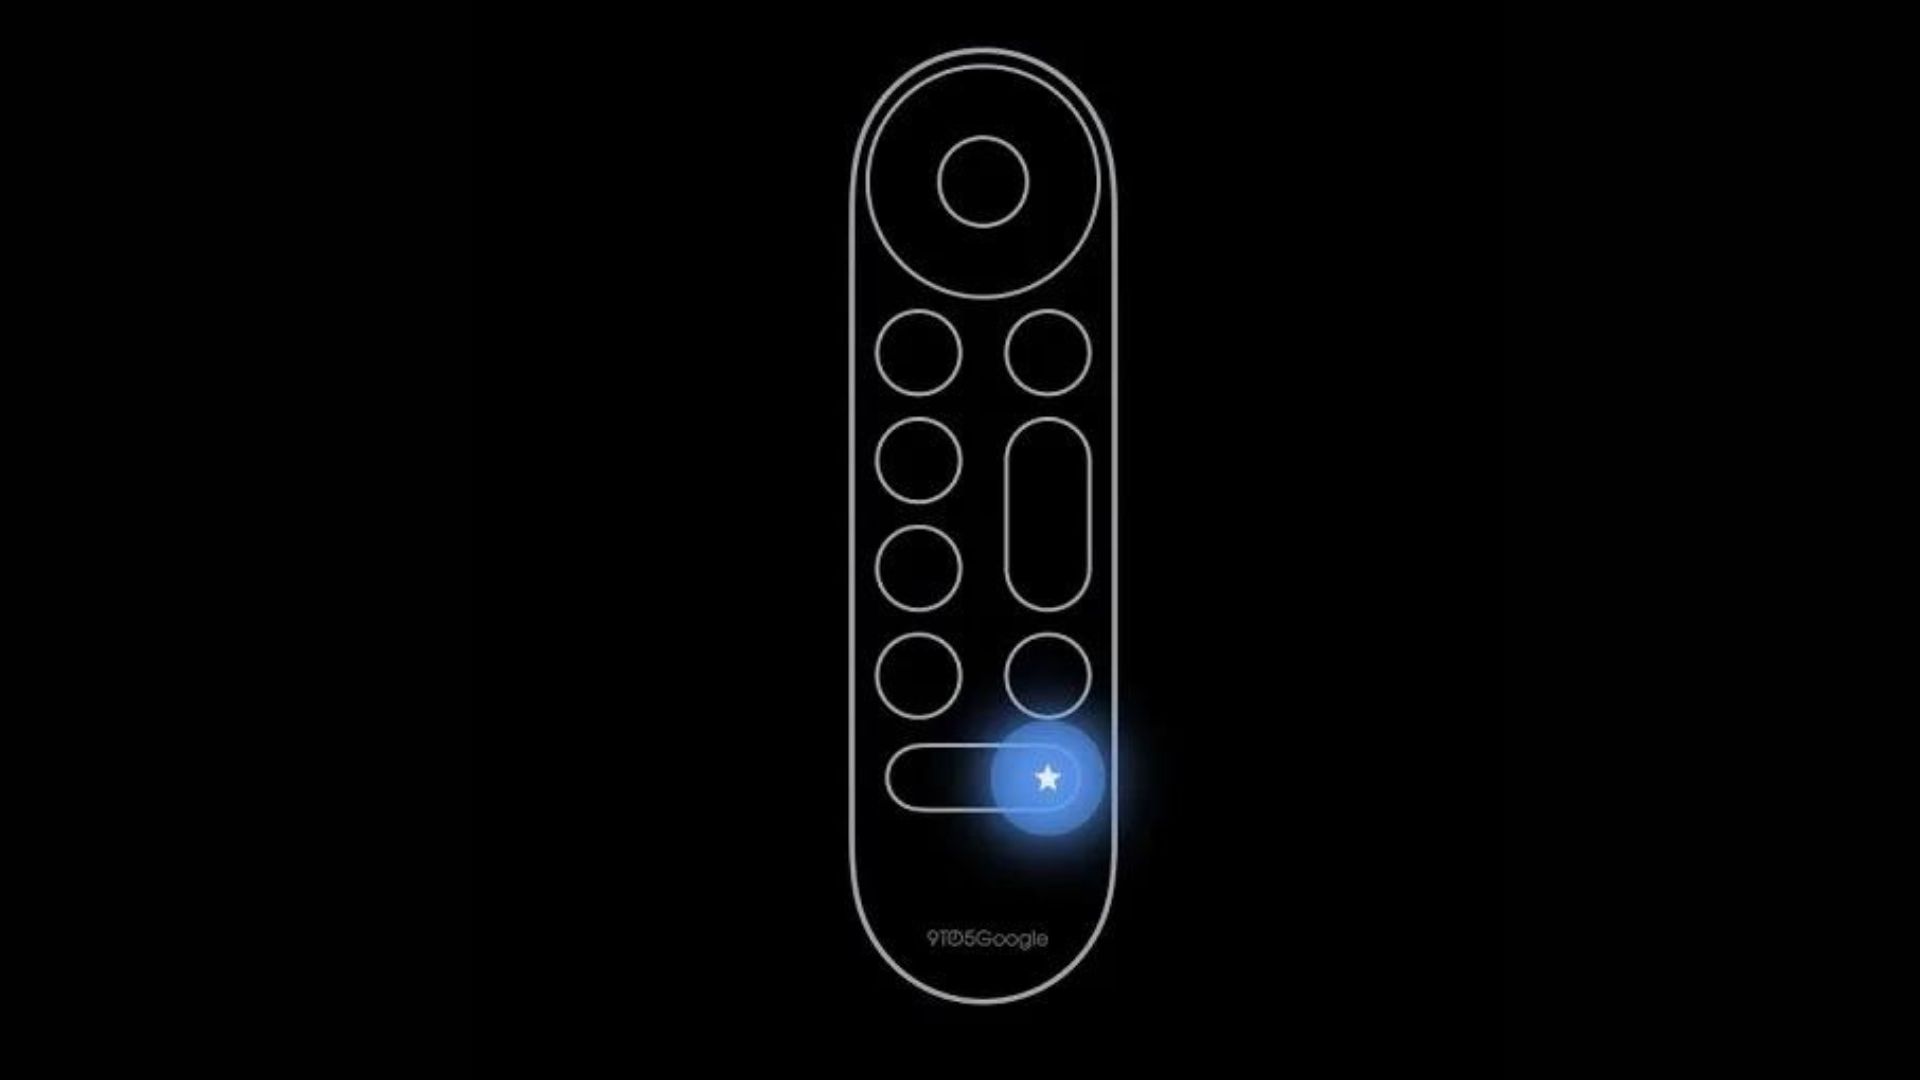 A leaked Google Chromecast remote design